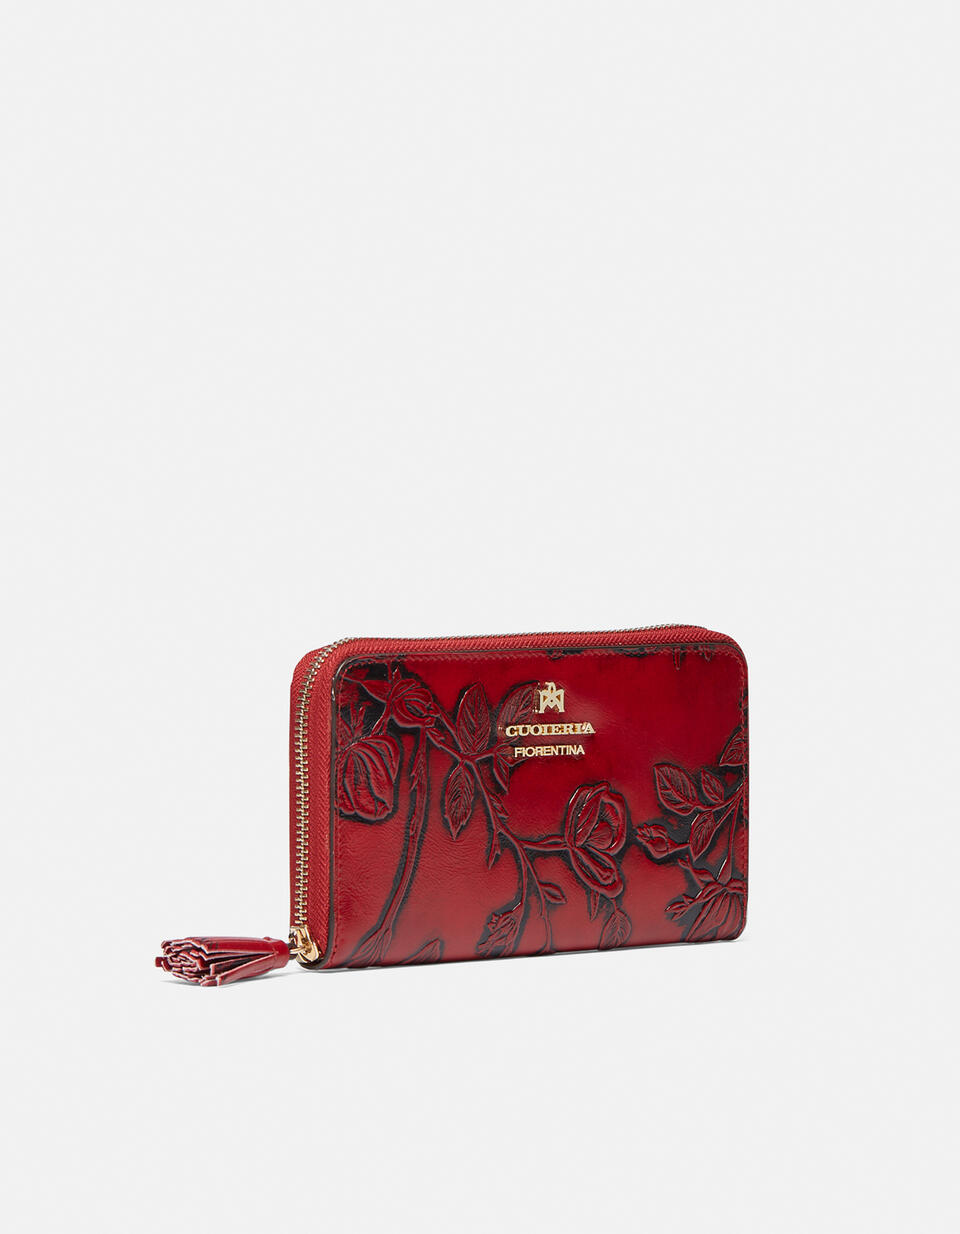 Zip around wallet Red  - Women's Wallets - Women's Wallets - Wallets - Cuoieria Fiorentina